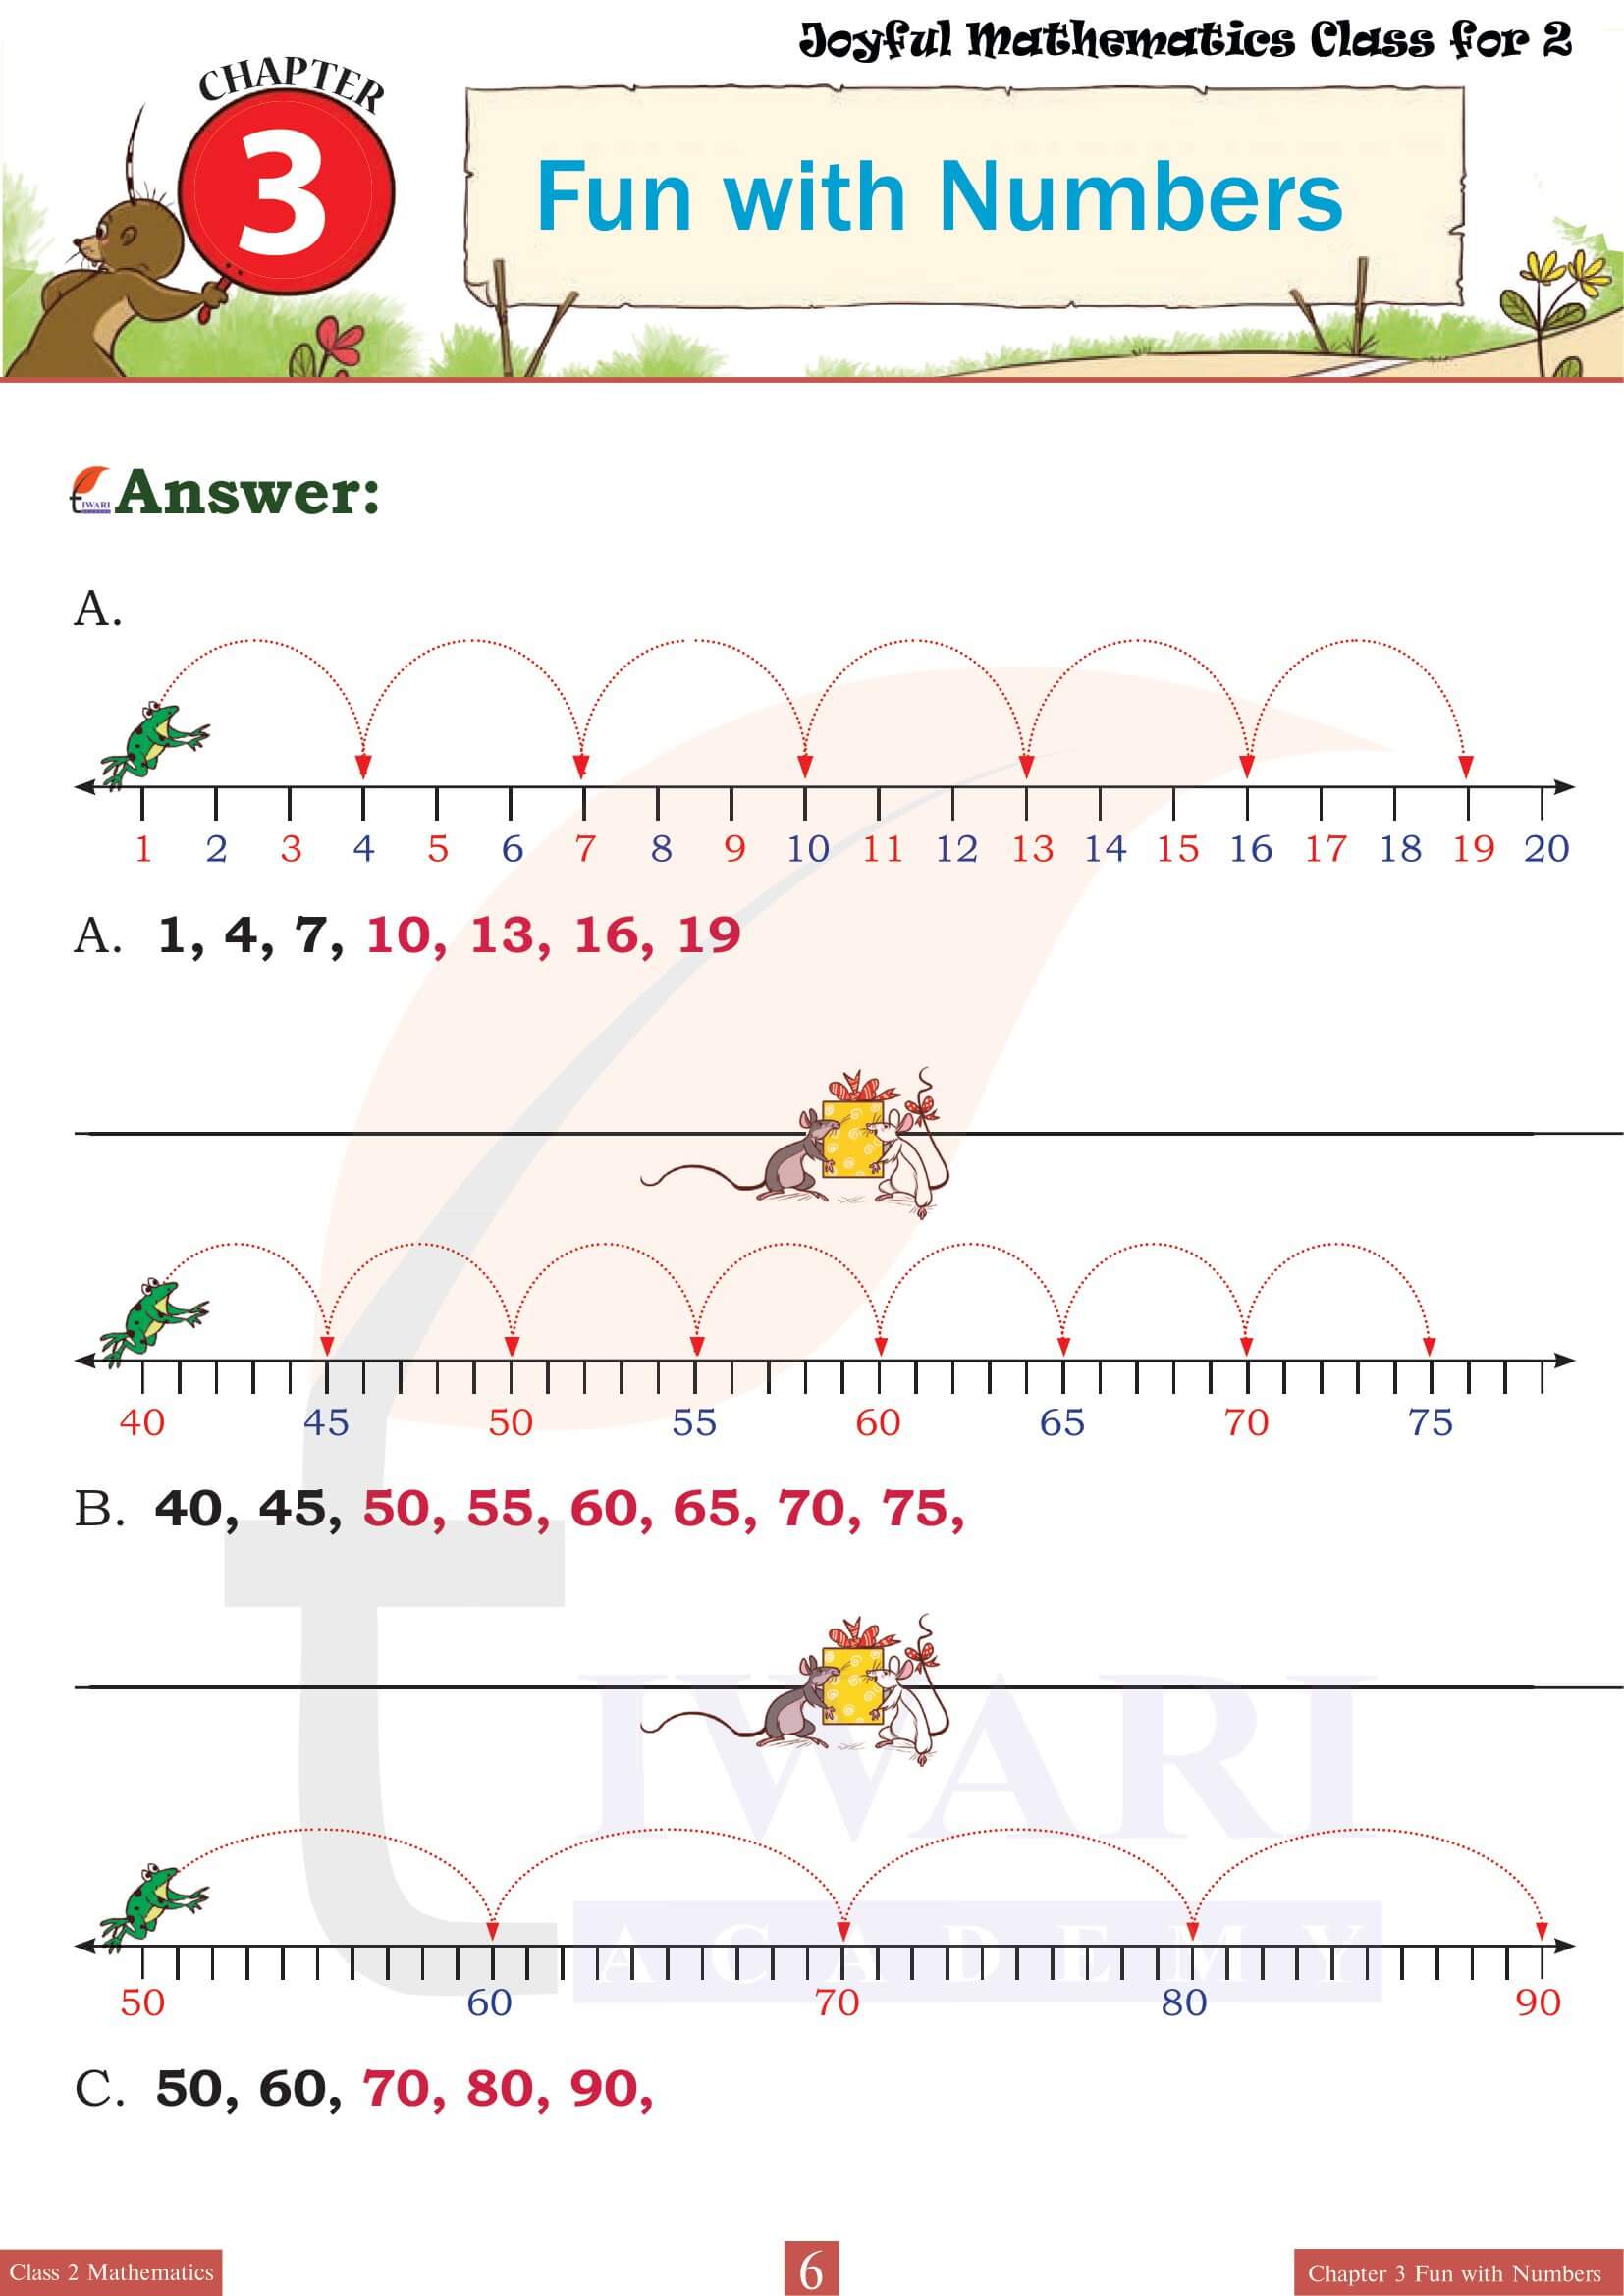 Class 2 Joyful Maths Chapter 3 Fun with Numbers